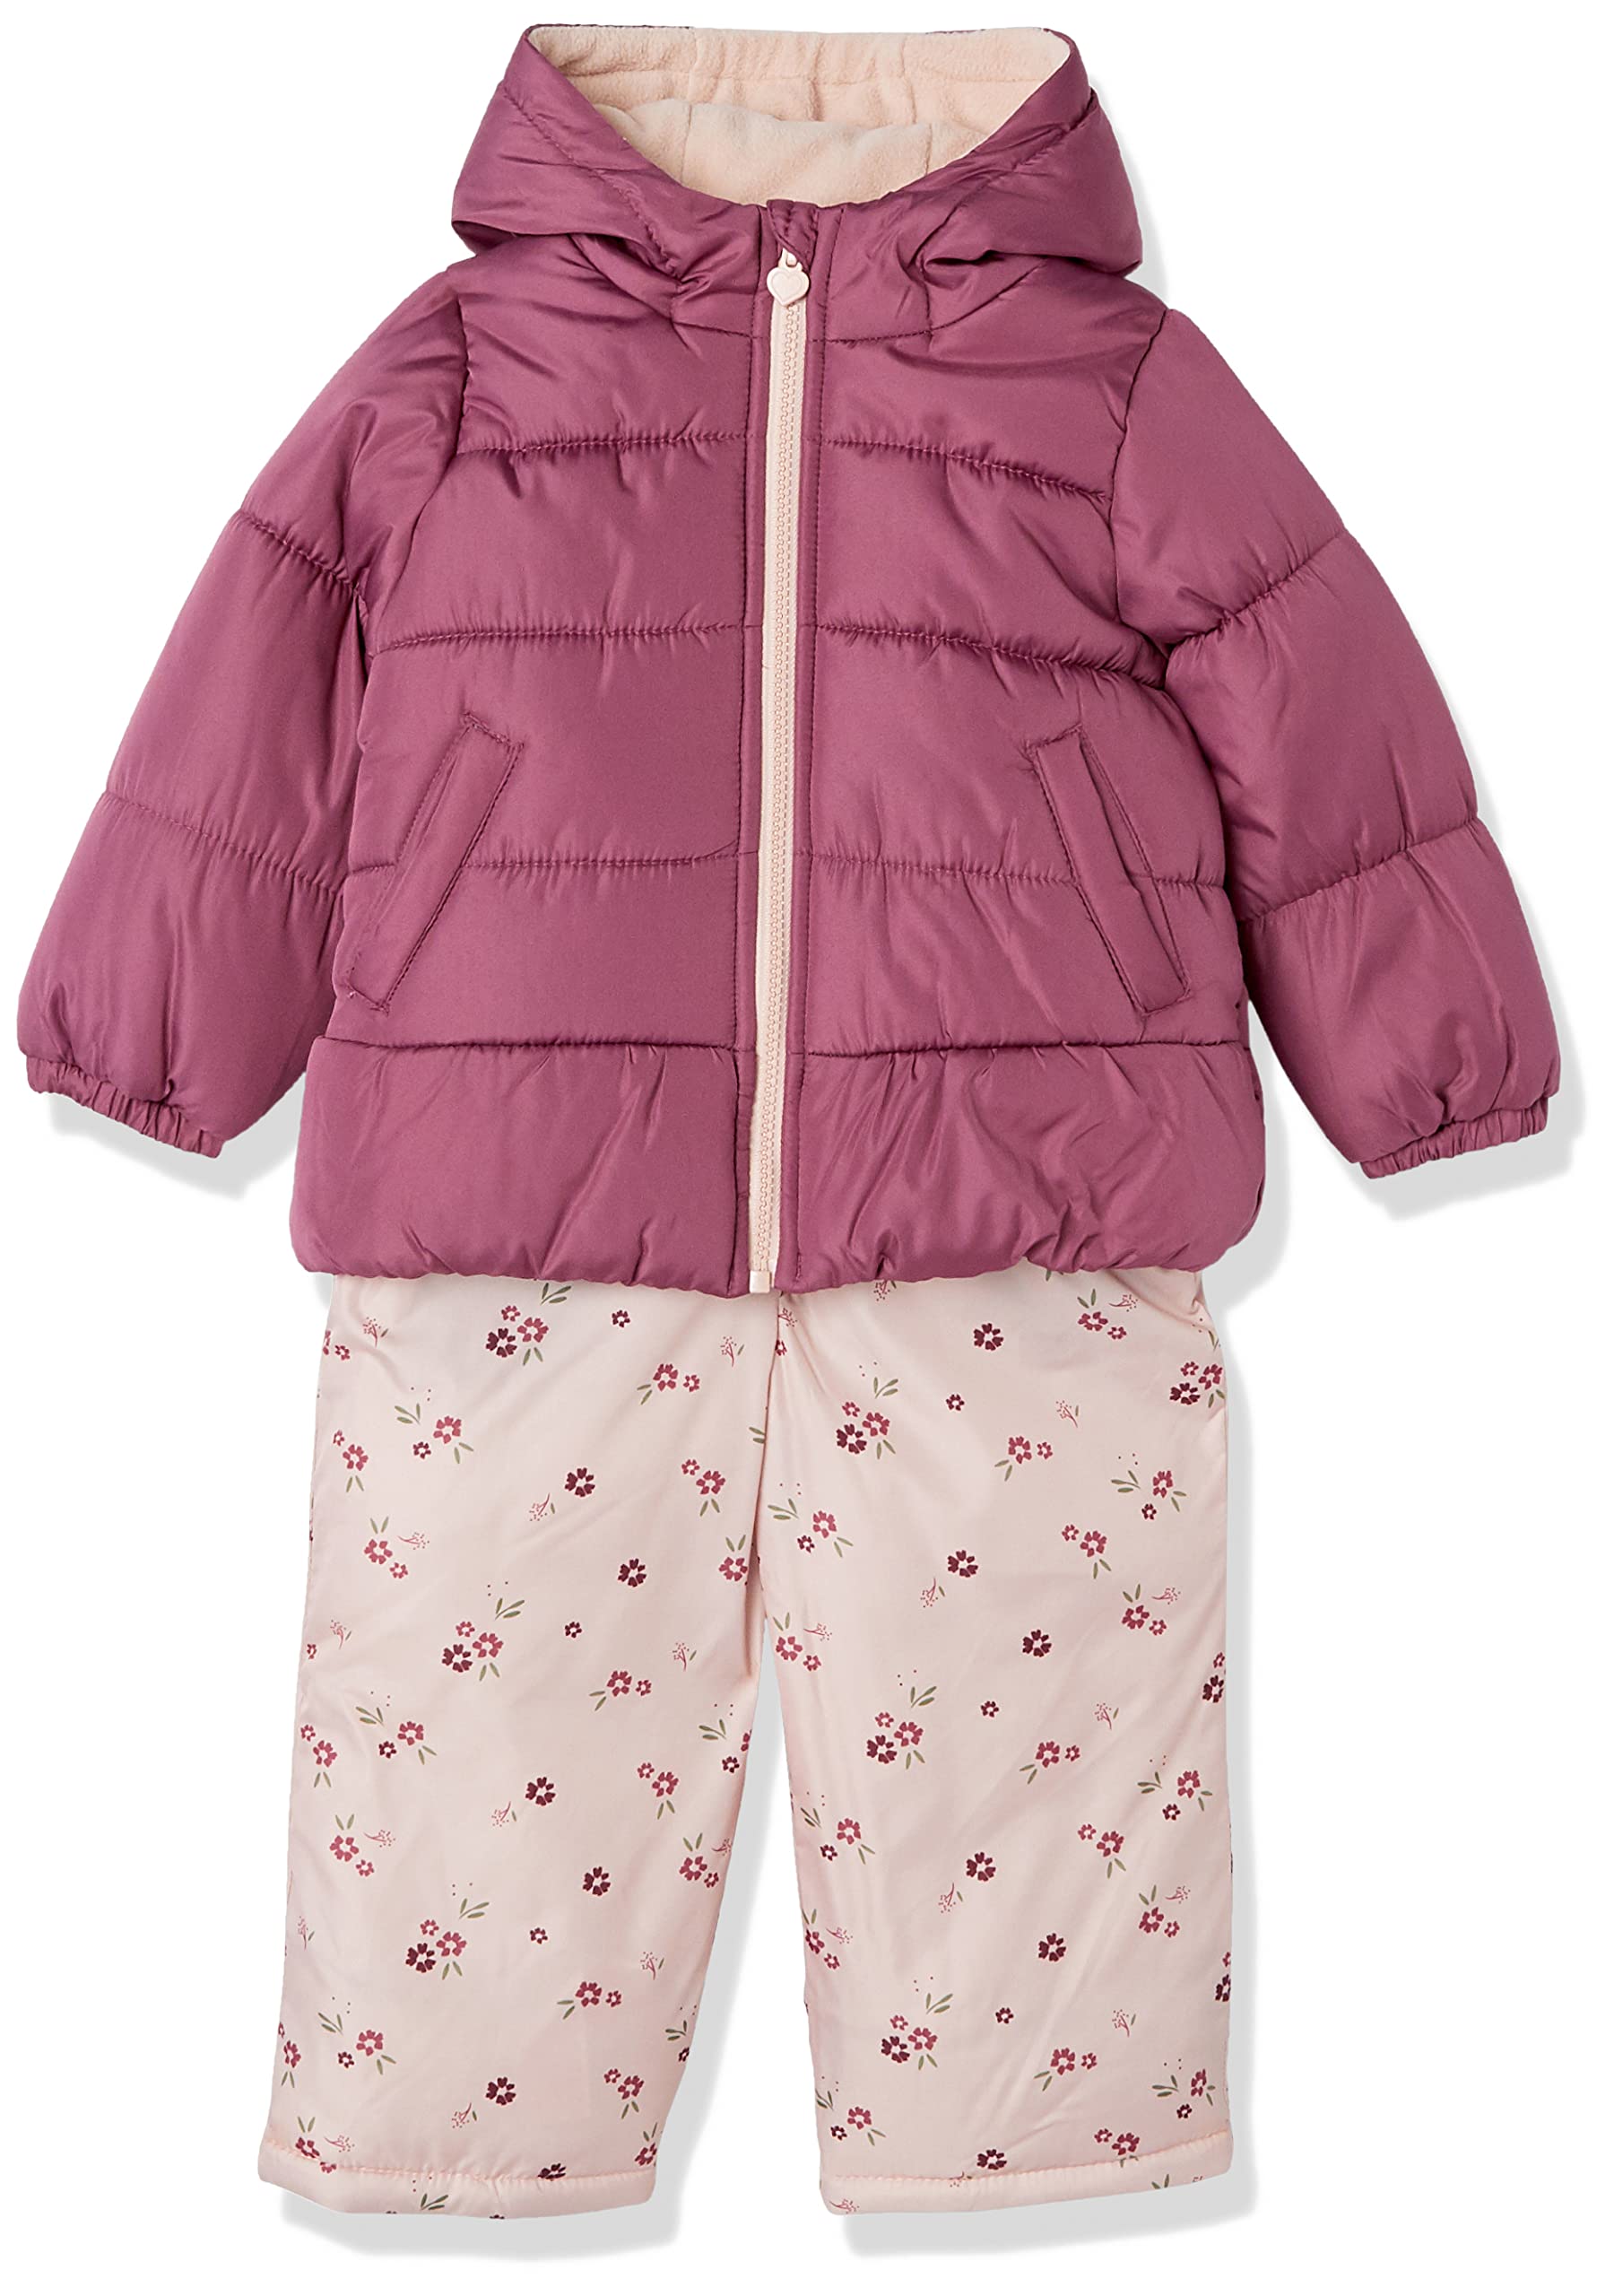 Simple Joys by Carter's Baby Water-Resistant Snowsuit Set-Hooded Winter Jacket, Maroon, 3T